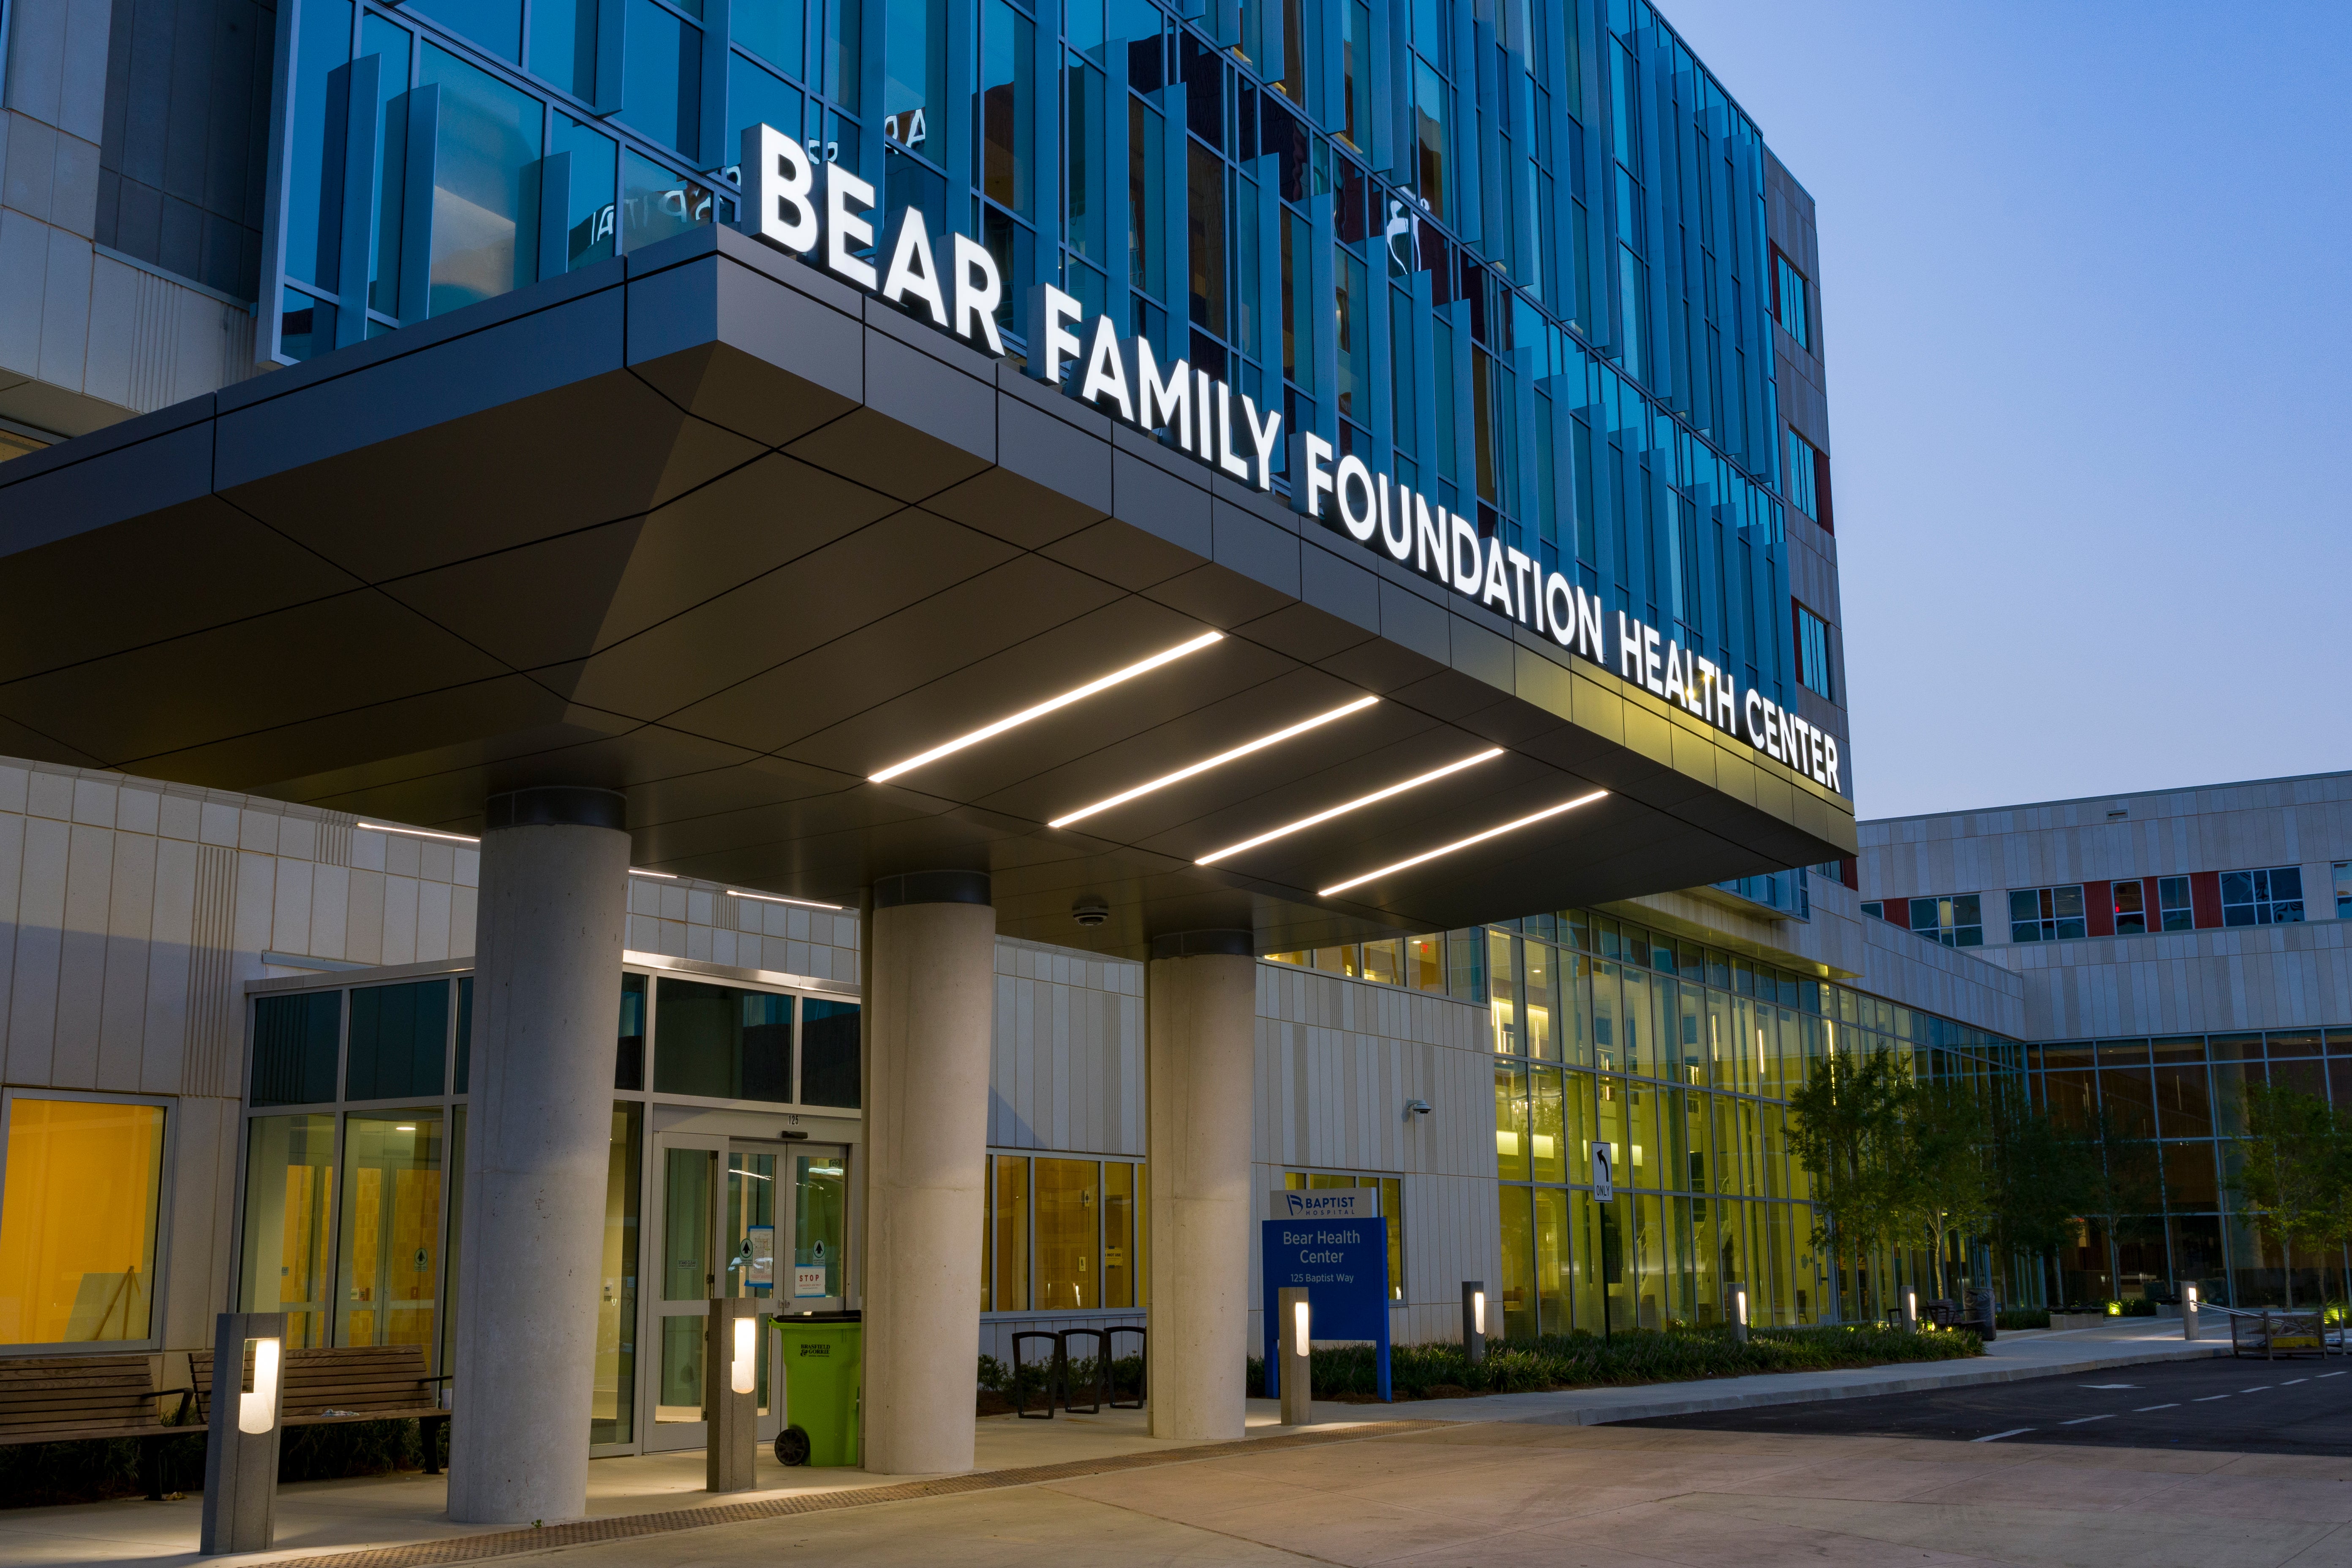 Outside of the Bear Family Foundation Health Center